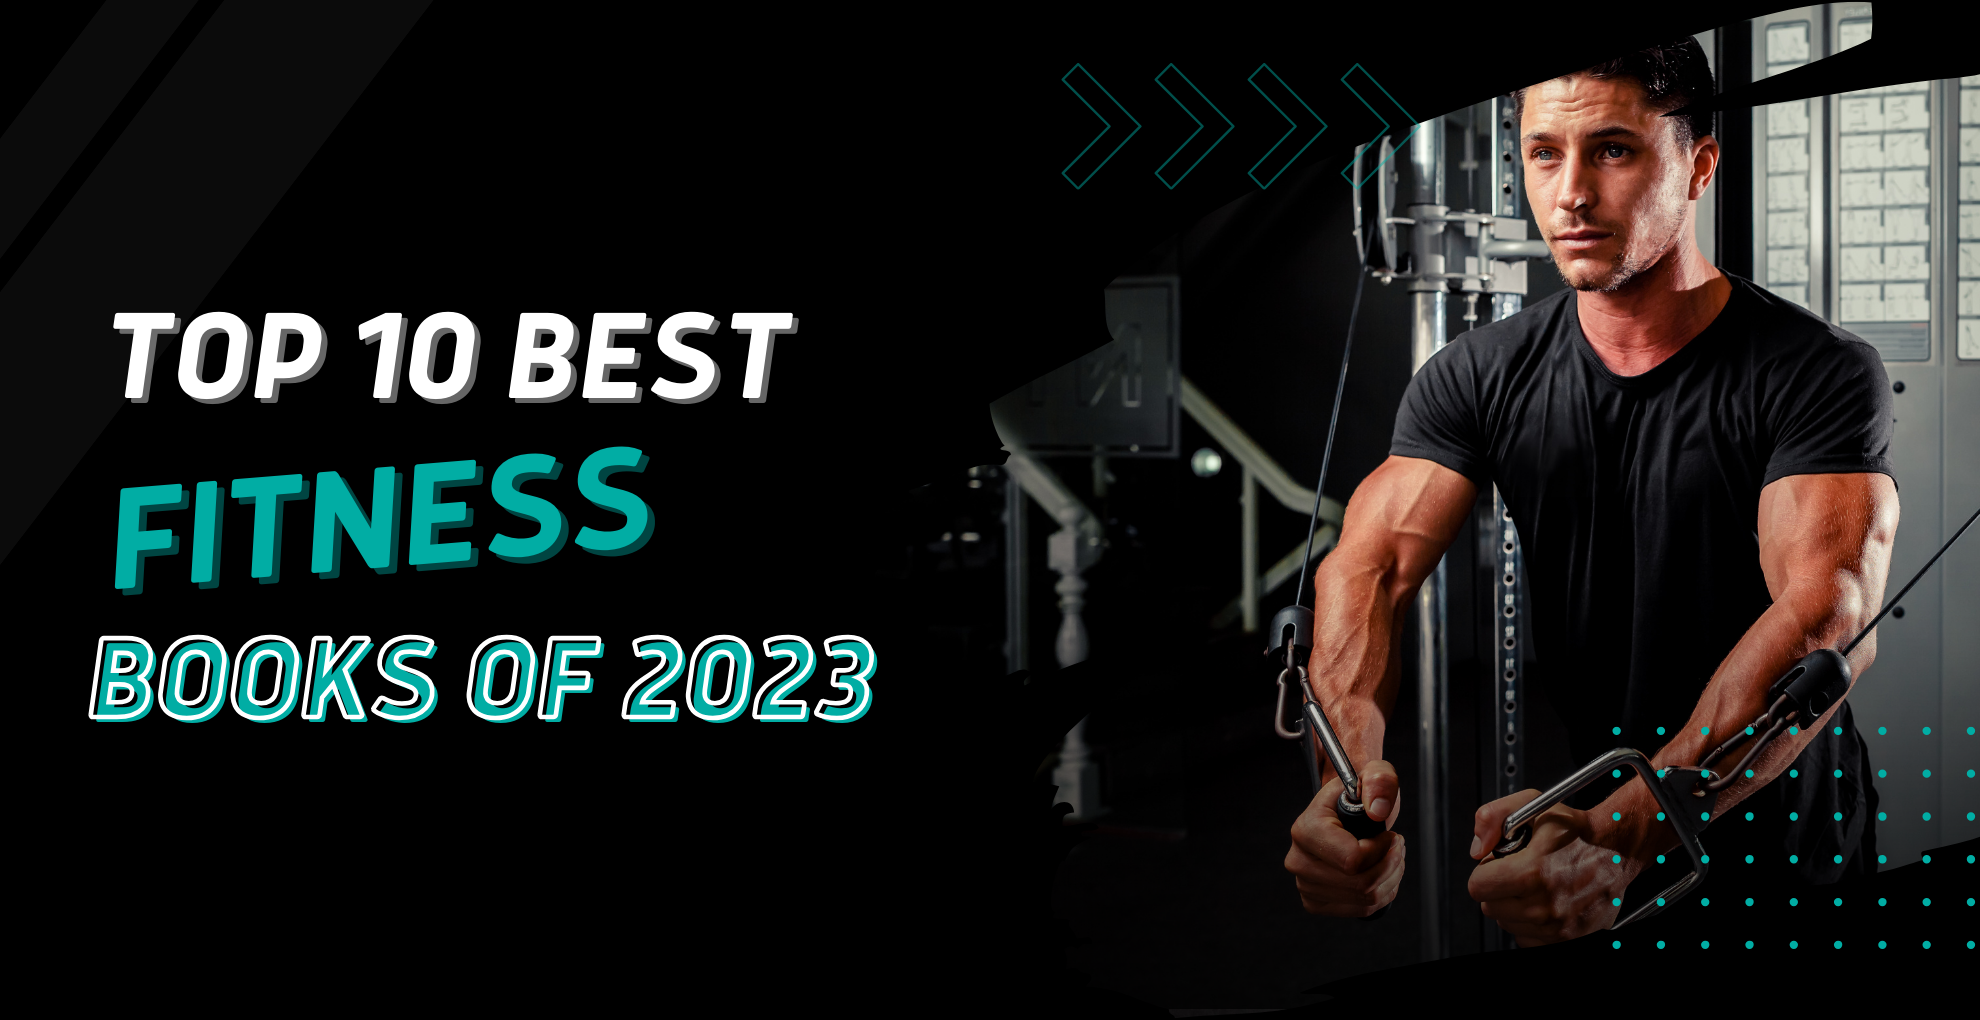 Top 10 Best Fitness Books of 2023, Sara